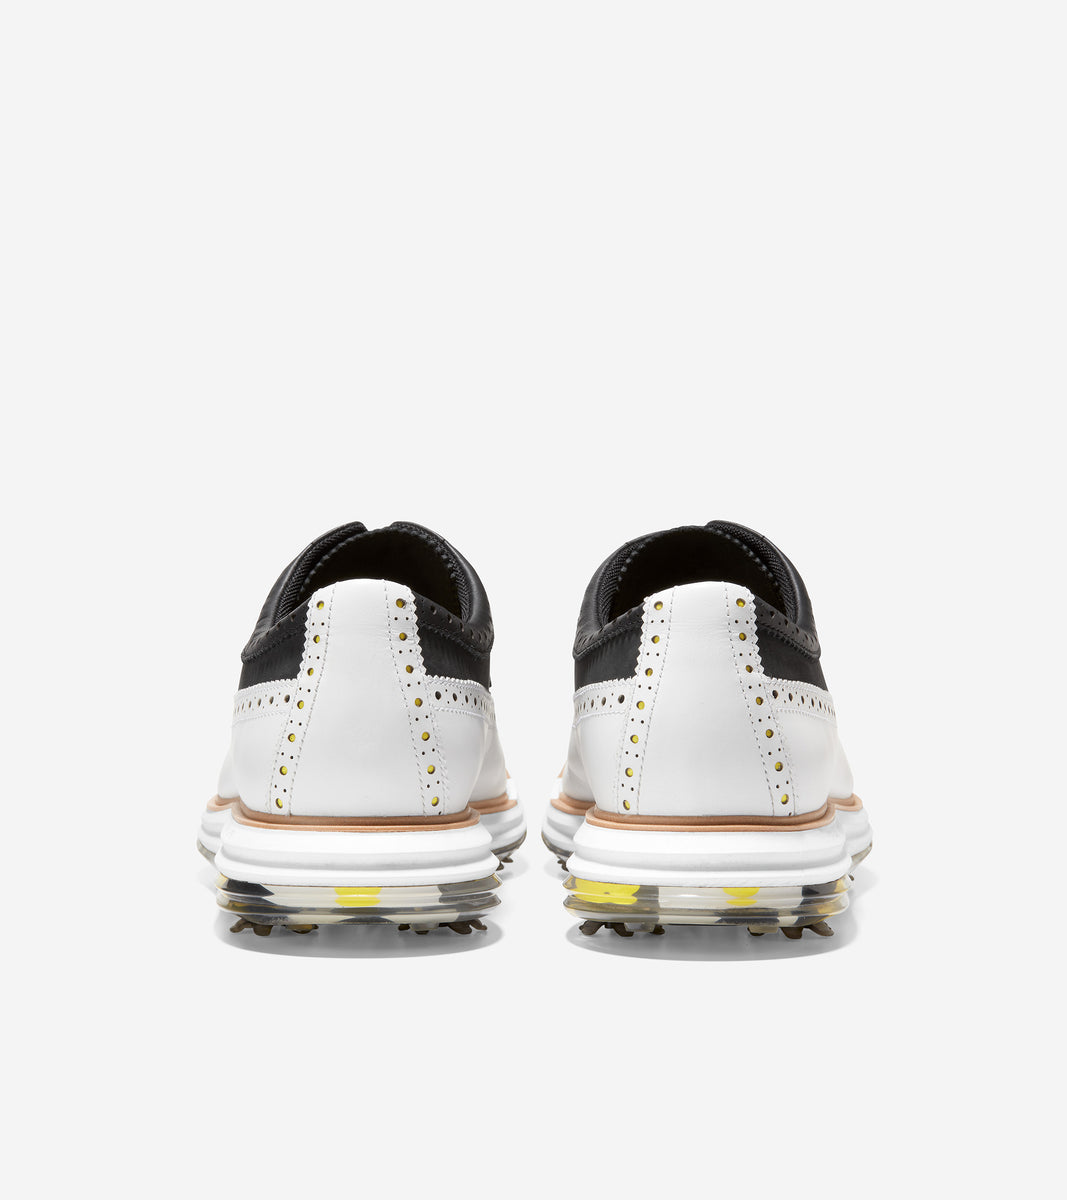 C36155-Ã˜Riginalgrand Tour Golf Shoe-Black-Optic White